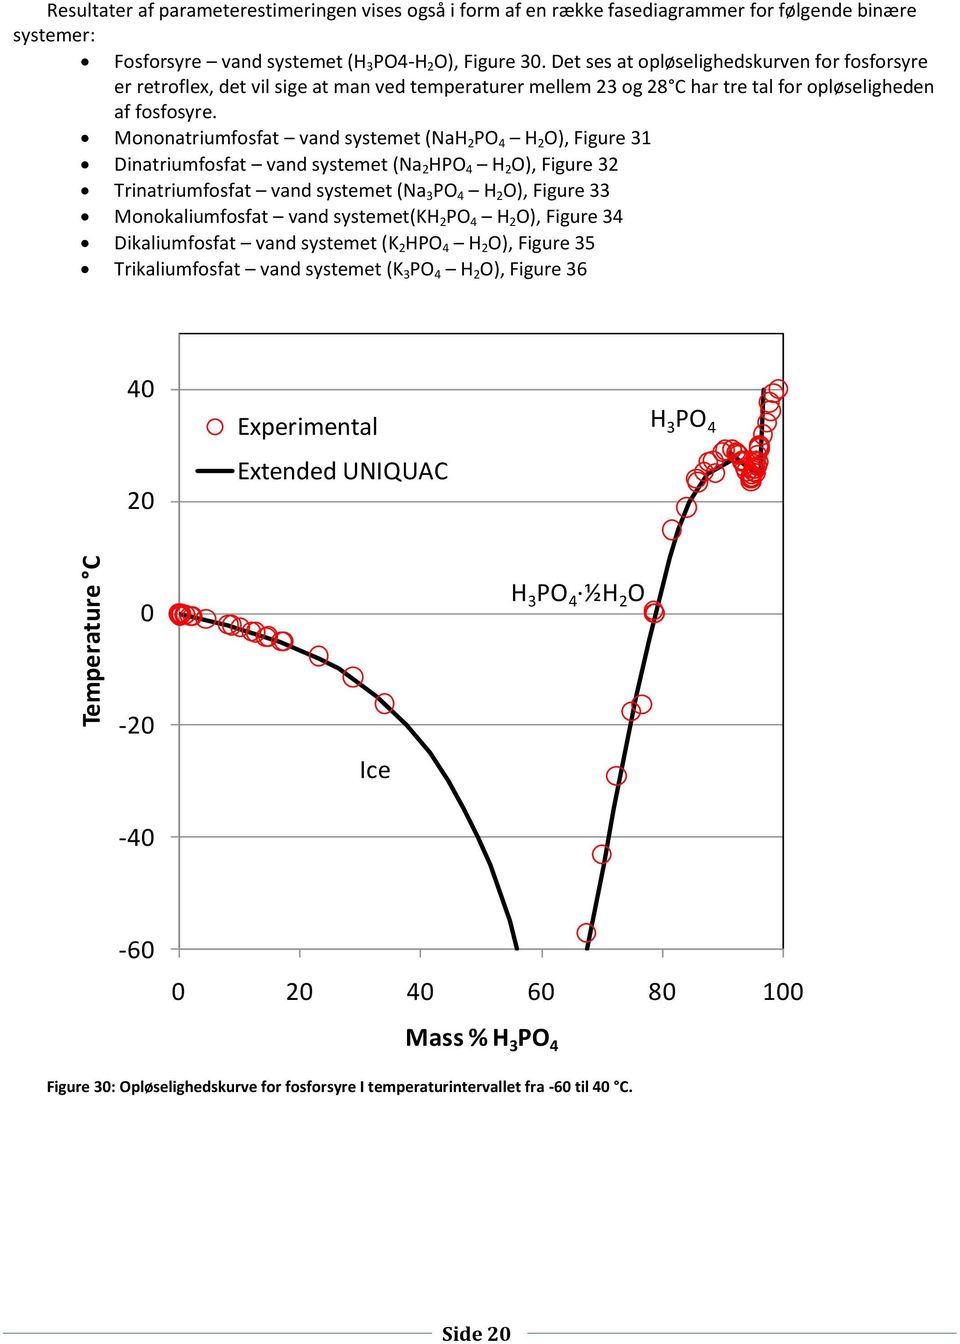 Mononatriumfosfat vand systemet (NaH PO H O), Figure 31 Dinatriumfosfat vand systemet (Na HPO H O), Figure 3 Trinatriumfosfat vand systemet (Na 3 PO H O), Figure 33 Monokaliumfosfat vand